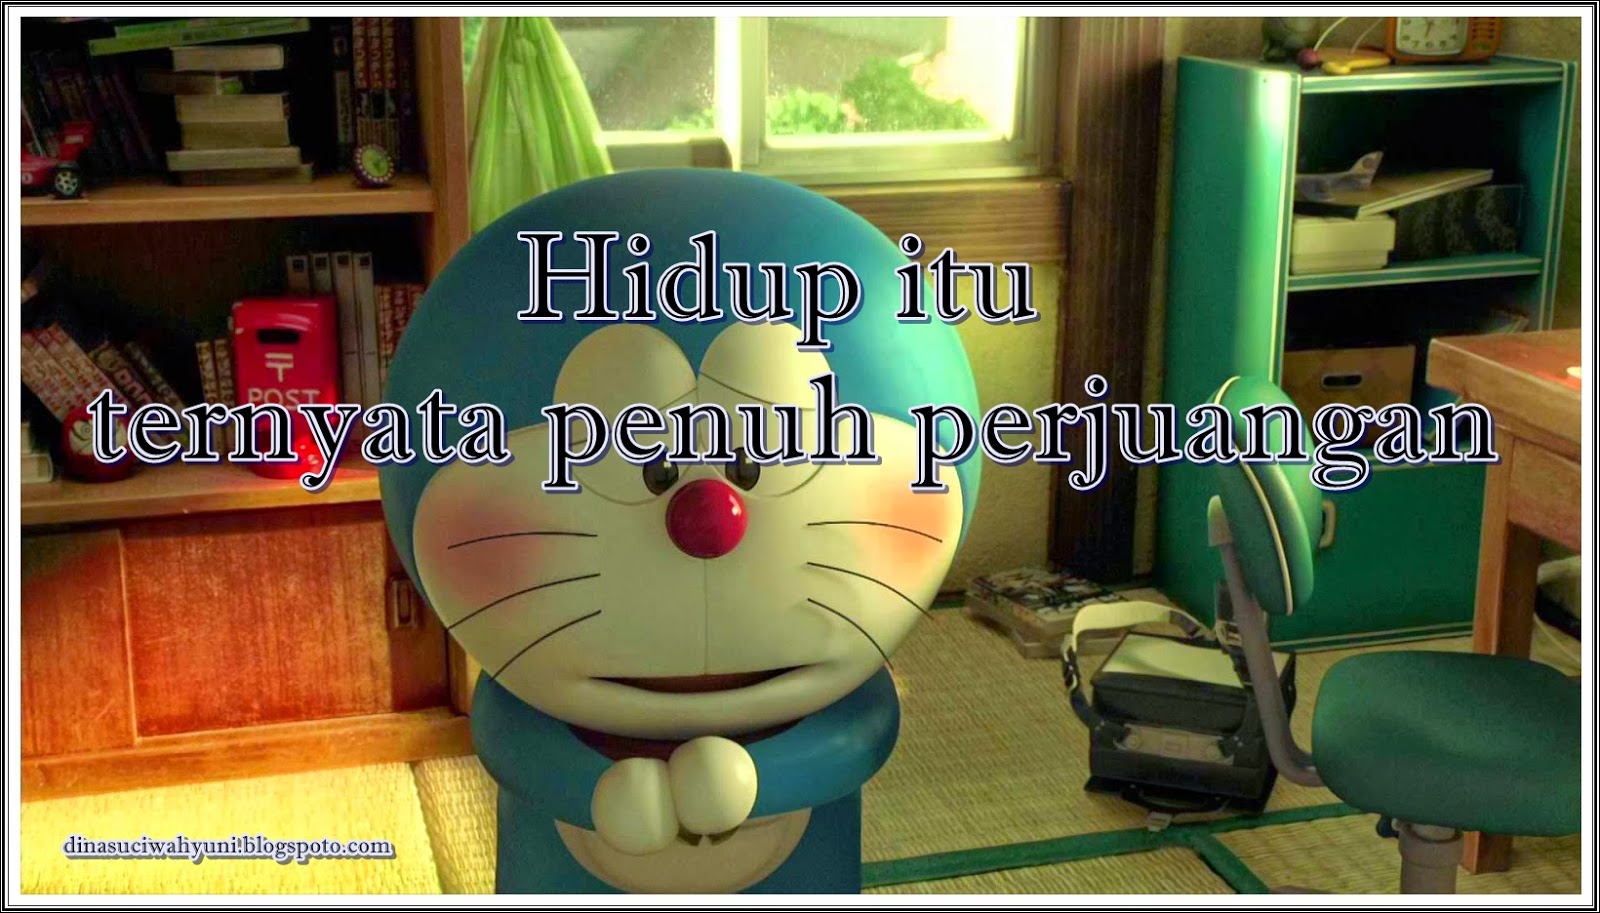 Gambar Doraemon Beserta Kata Kata Romantis Cikimmcom